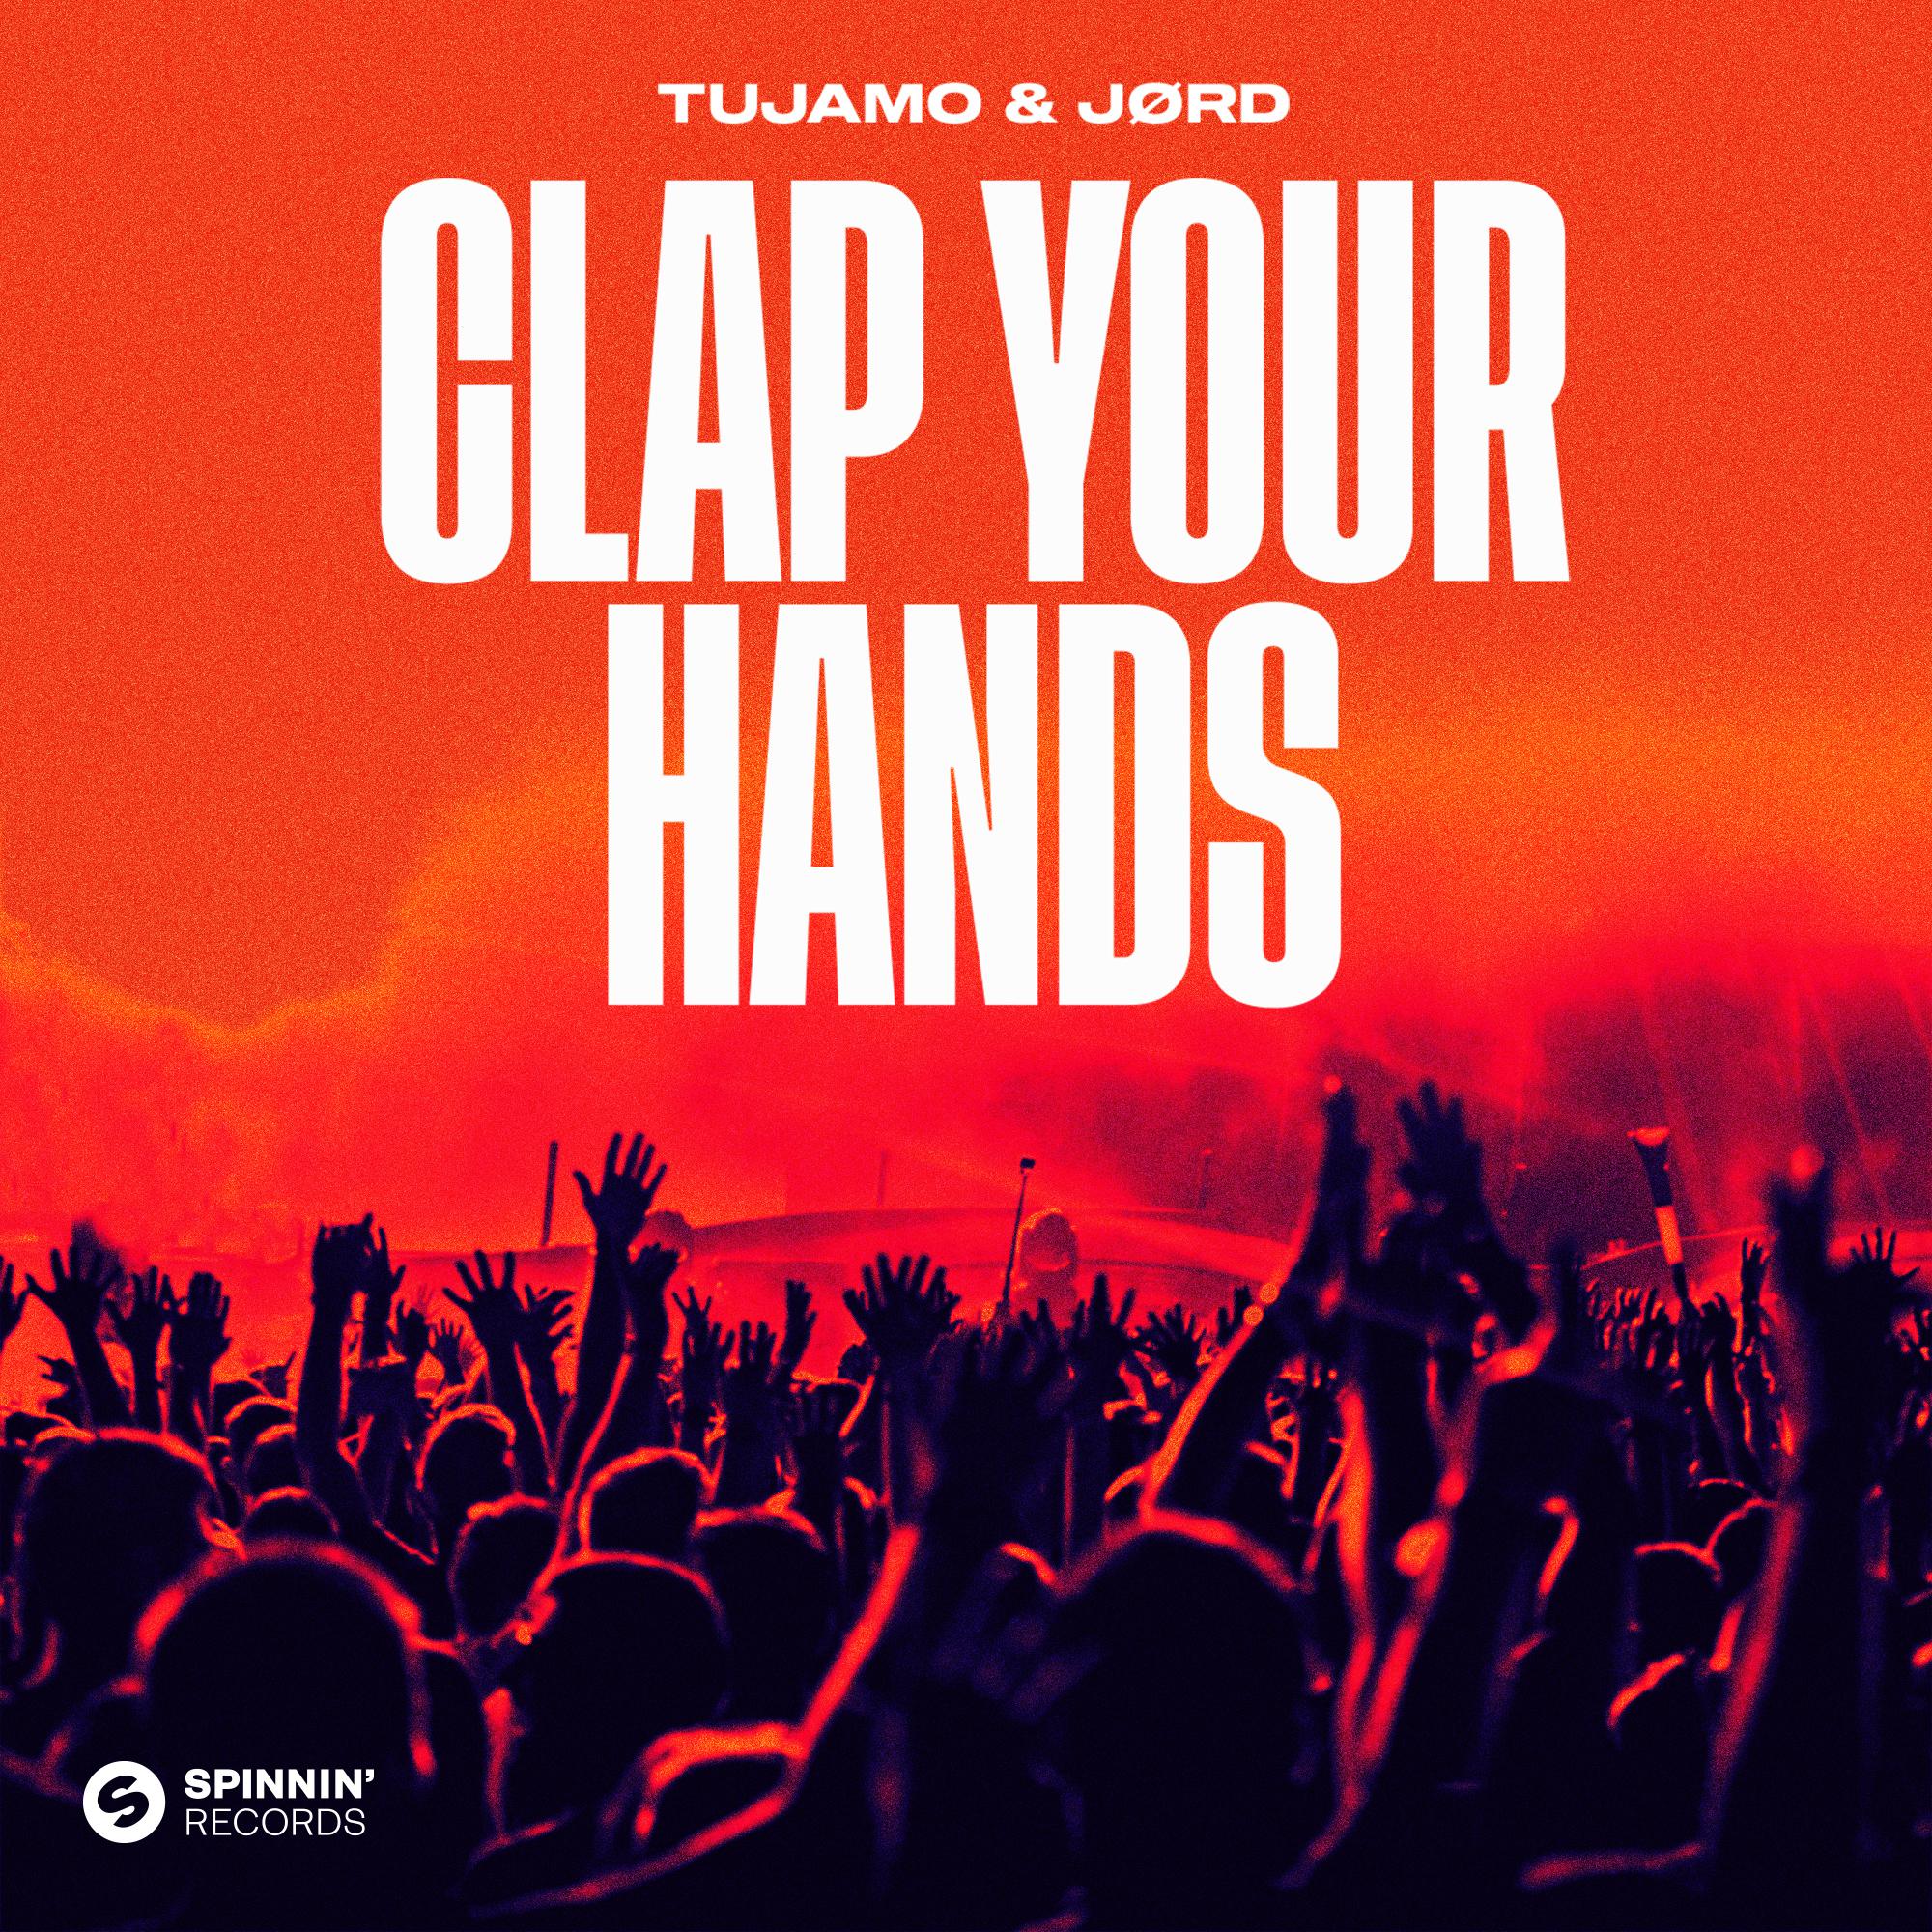 Clap Your Hands专辑